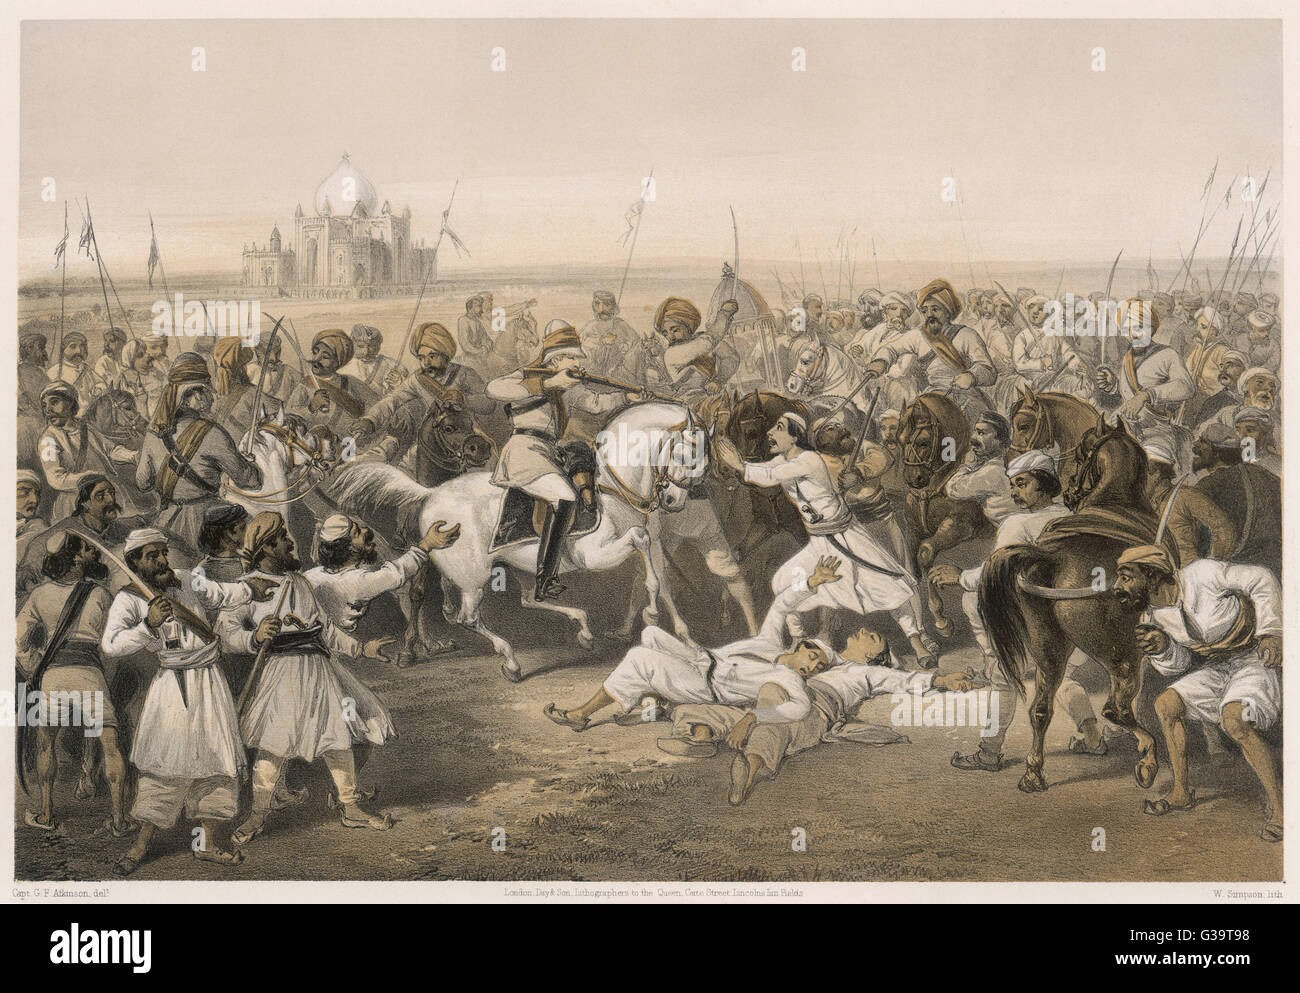 SHAHZADAGHS/CAPTURE/1857 Stockfoto